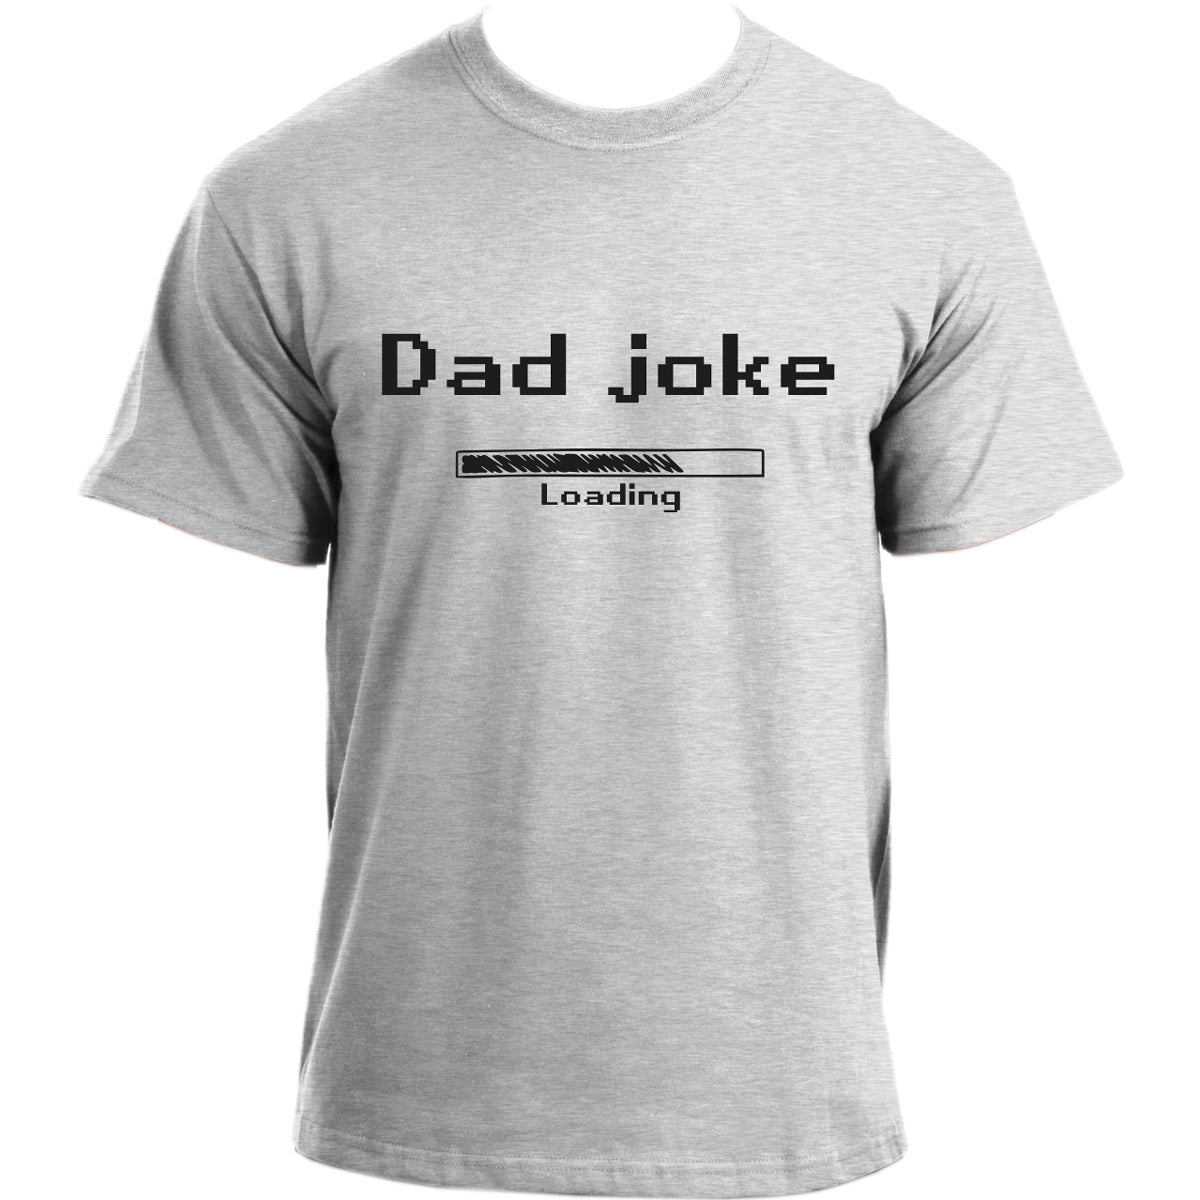 Dad Joke Loading T-shirt | Funny dad short sleeve T shirt for men